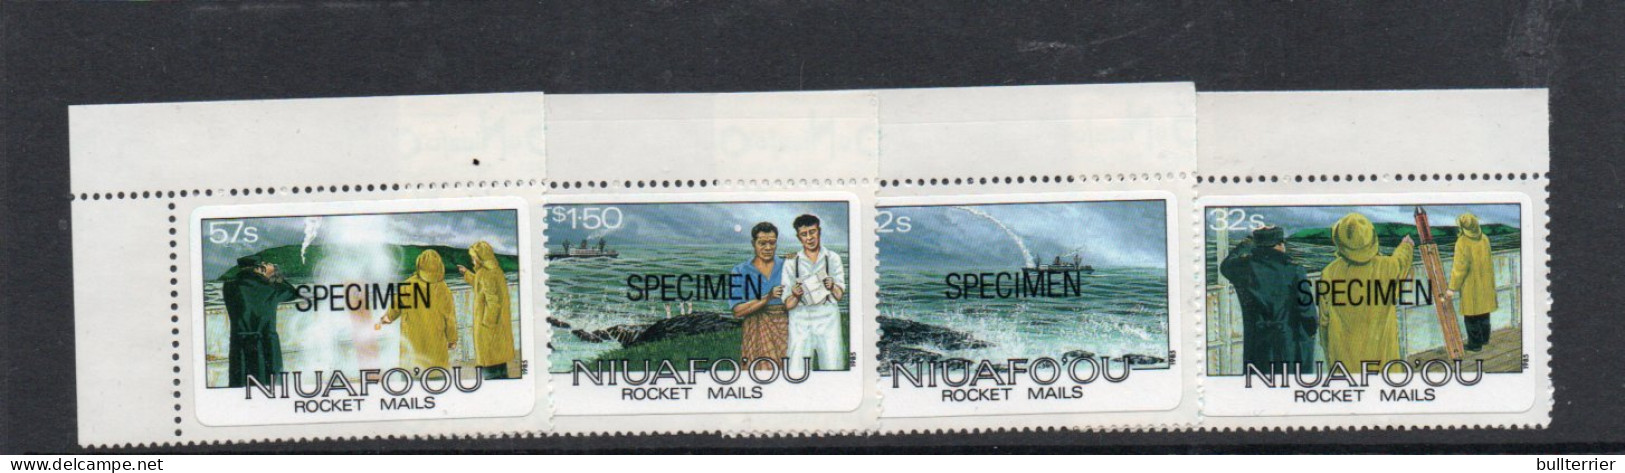 NIUAFOOU - 1985 - ROCKET MAILS SET OF 4   " SPECIMENS"  MINT NEVER HINGED  - Autres - Océanie